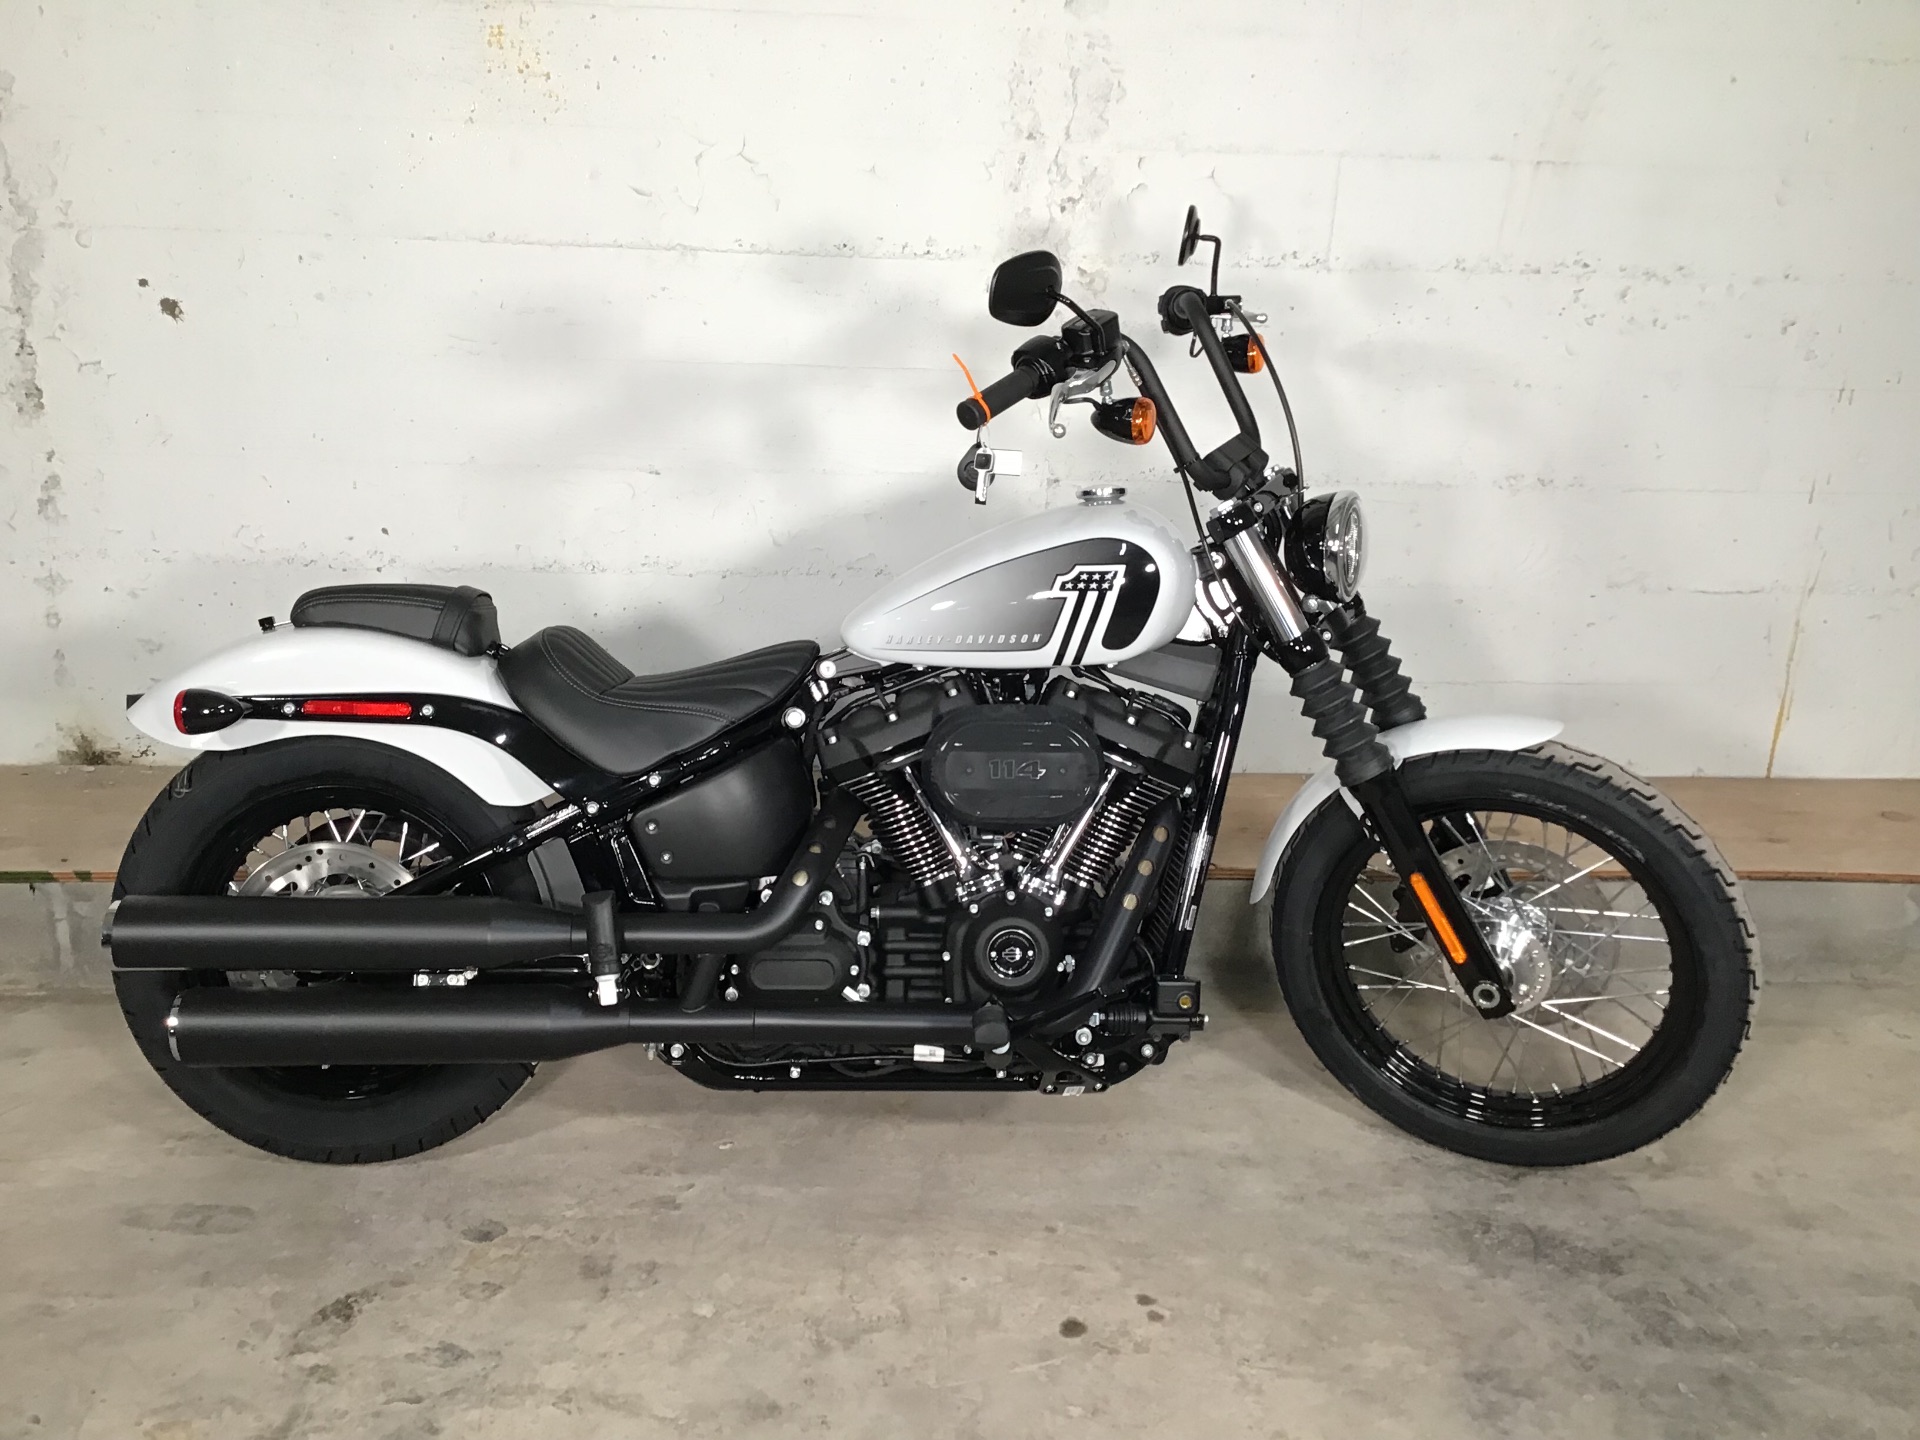 Used 2019 Harley Davidson Street Bob Vivid Black Motorcycles In Burlington Nc 021078